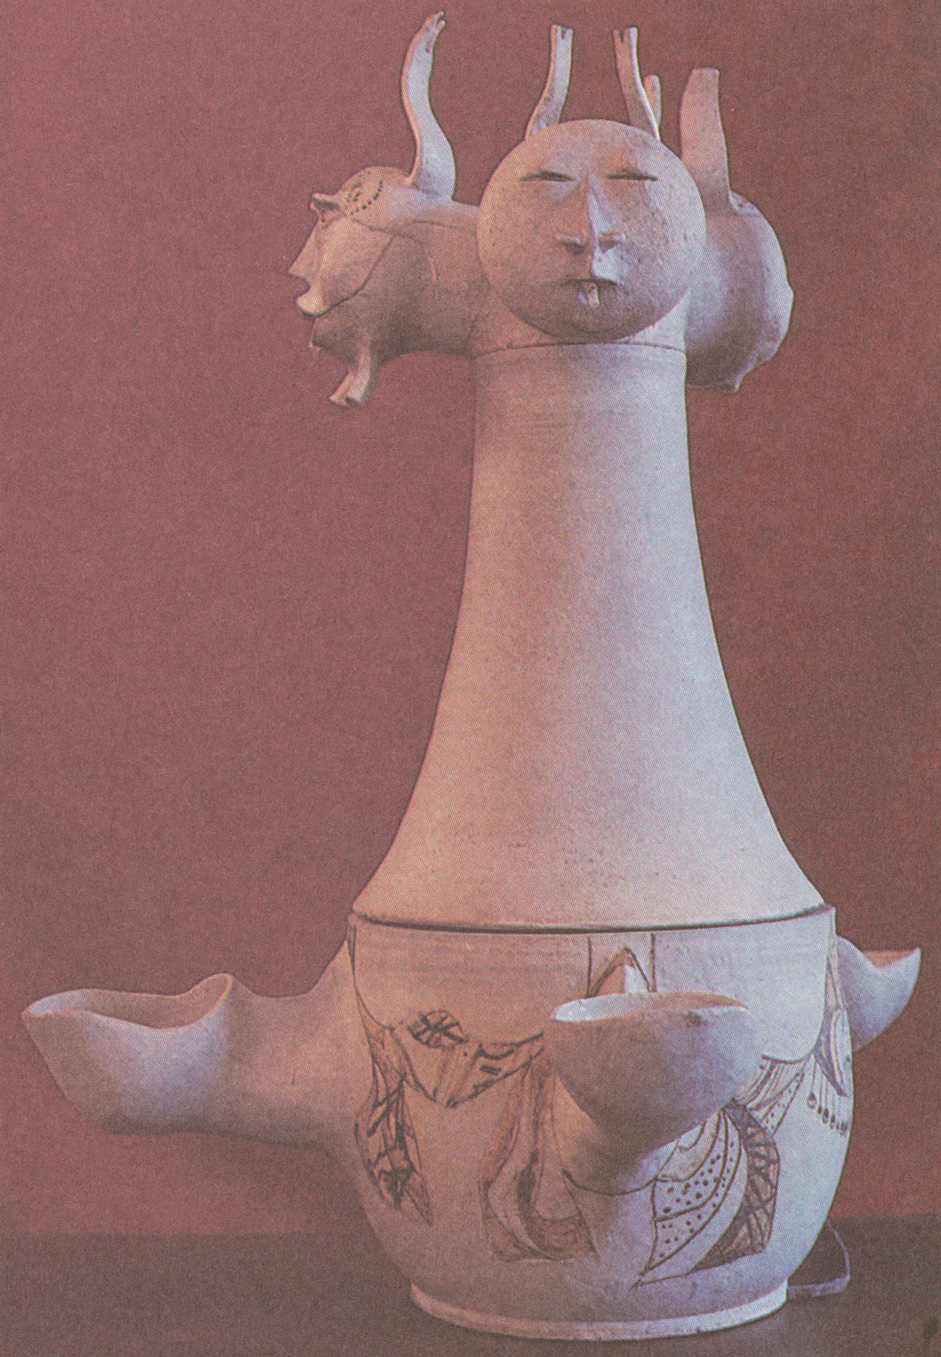 Camille Billops ceramic piece